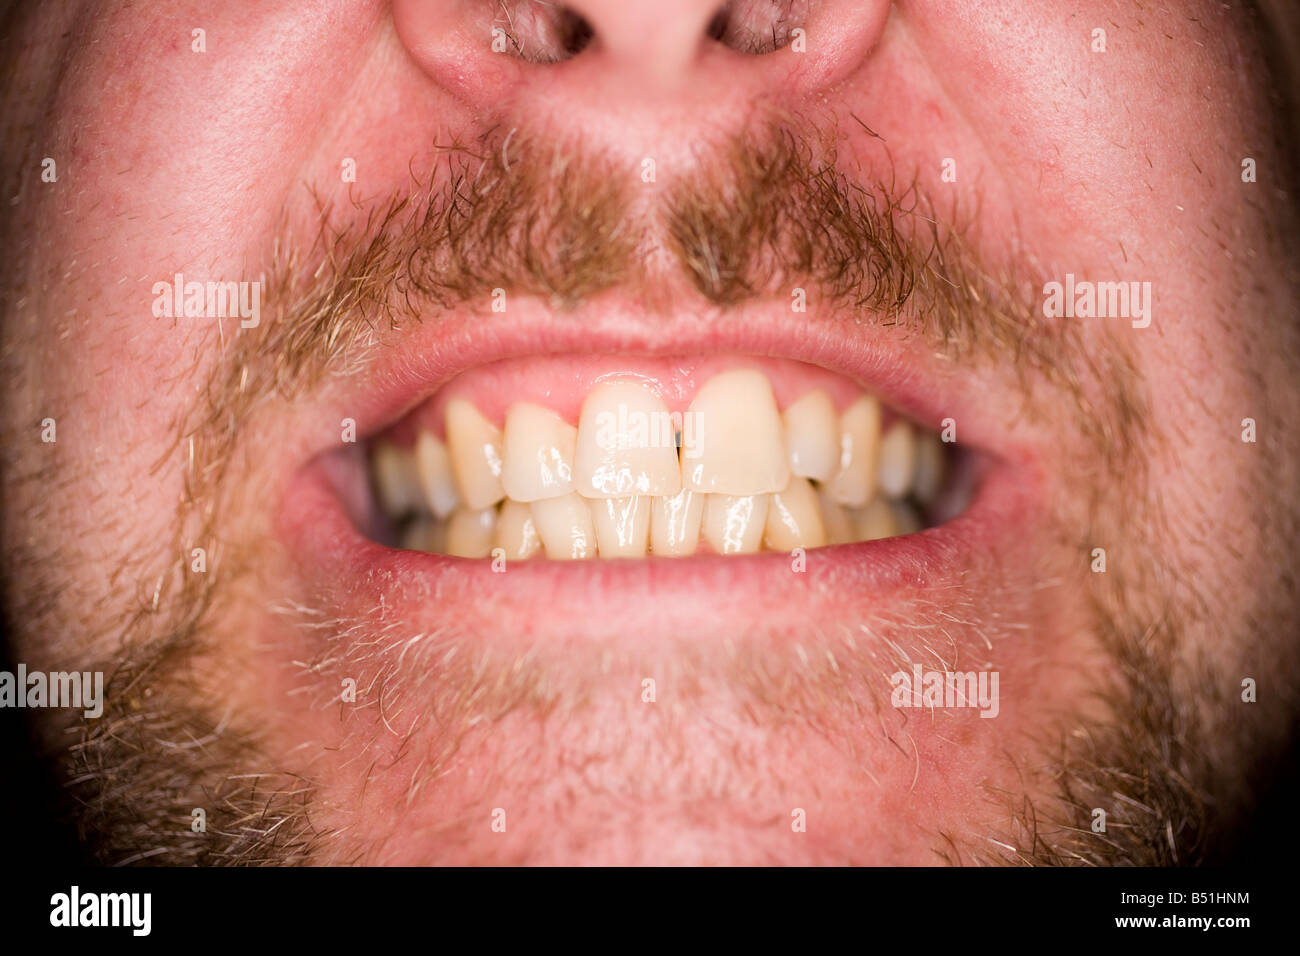 Man with a beard shows teeth Stock Photo